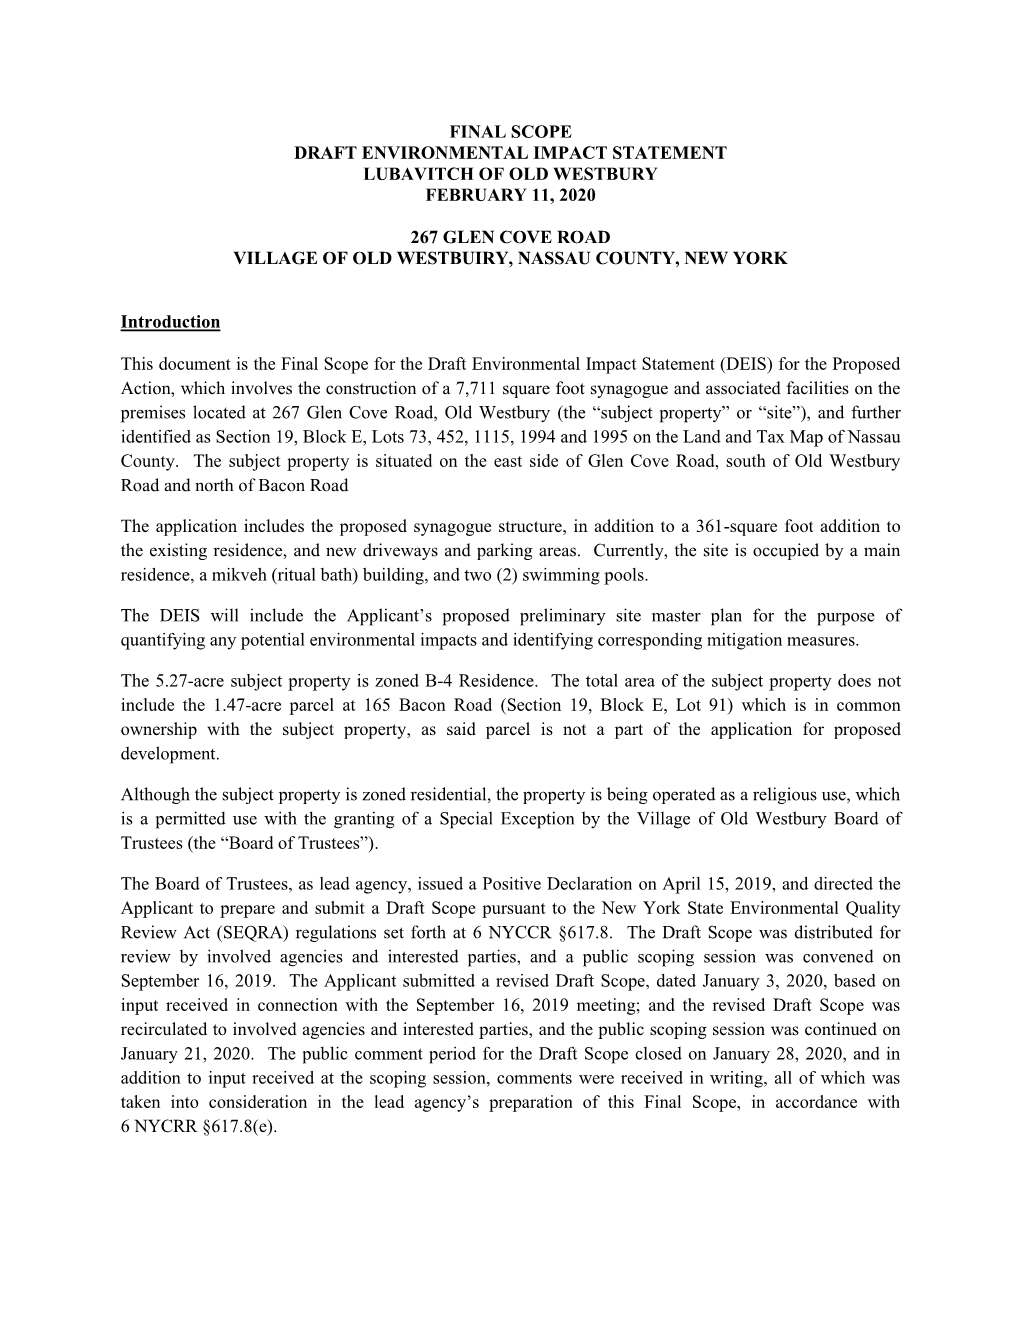 Final Scope Draft Environmental Impact Statement Lubavitch of Old Westbury February 11, 2020